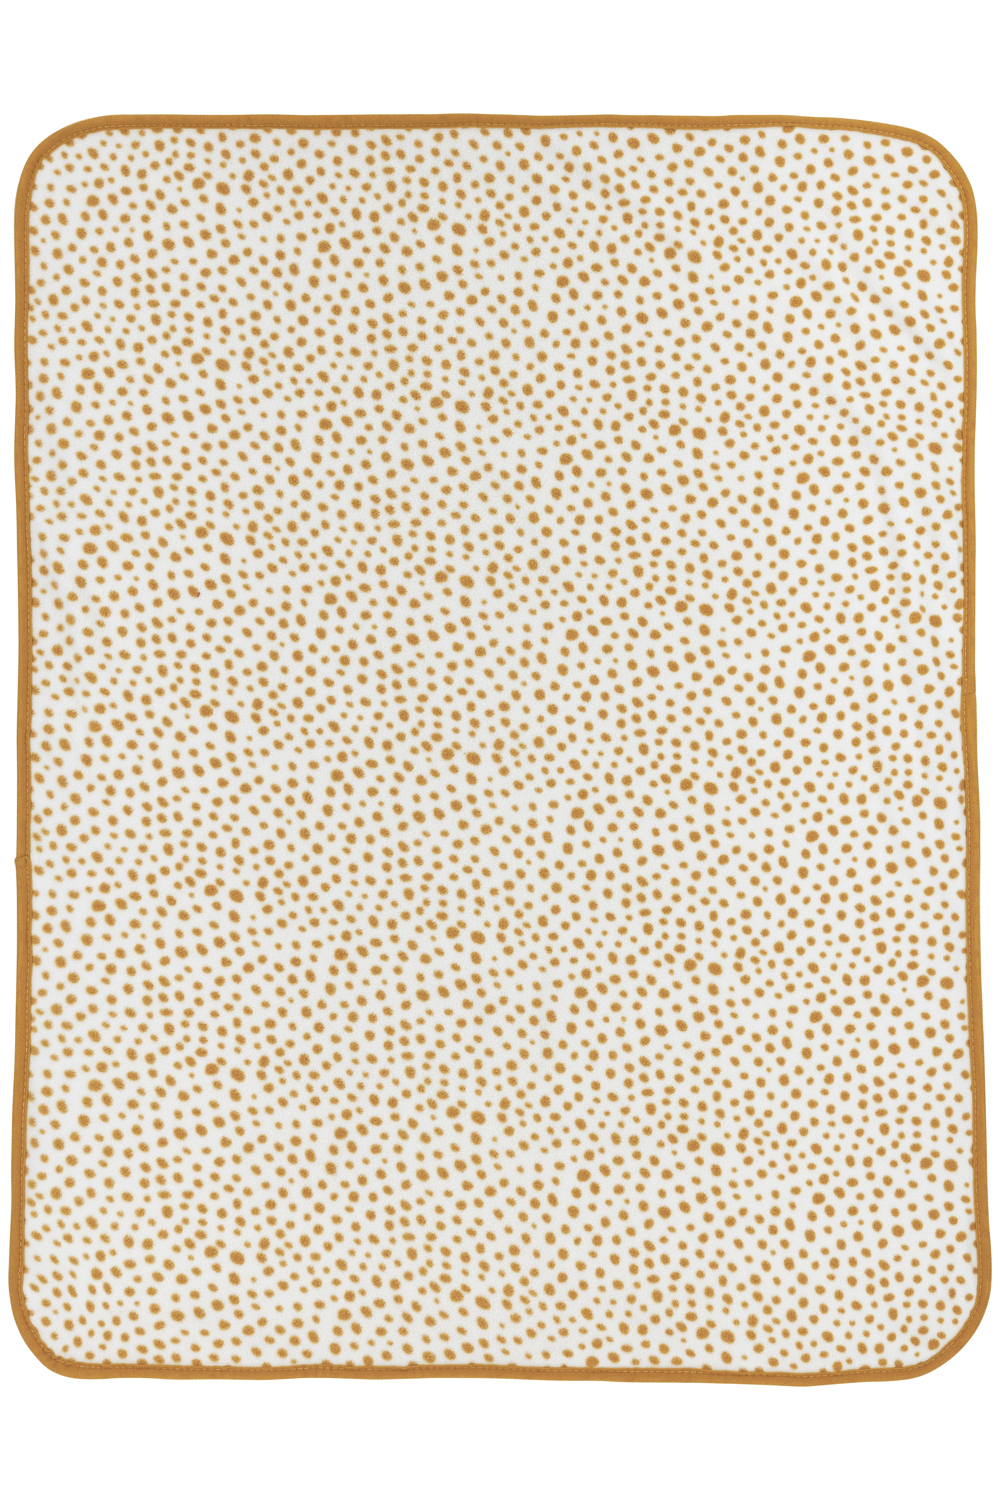 Reisedecke fleece Cheetah - honey gold - 75x100cm